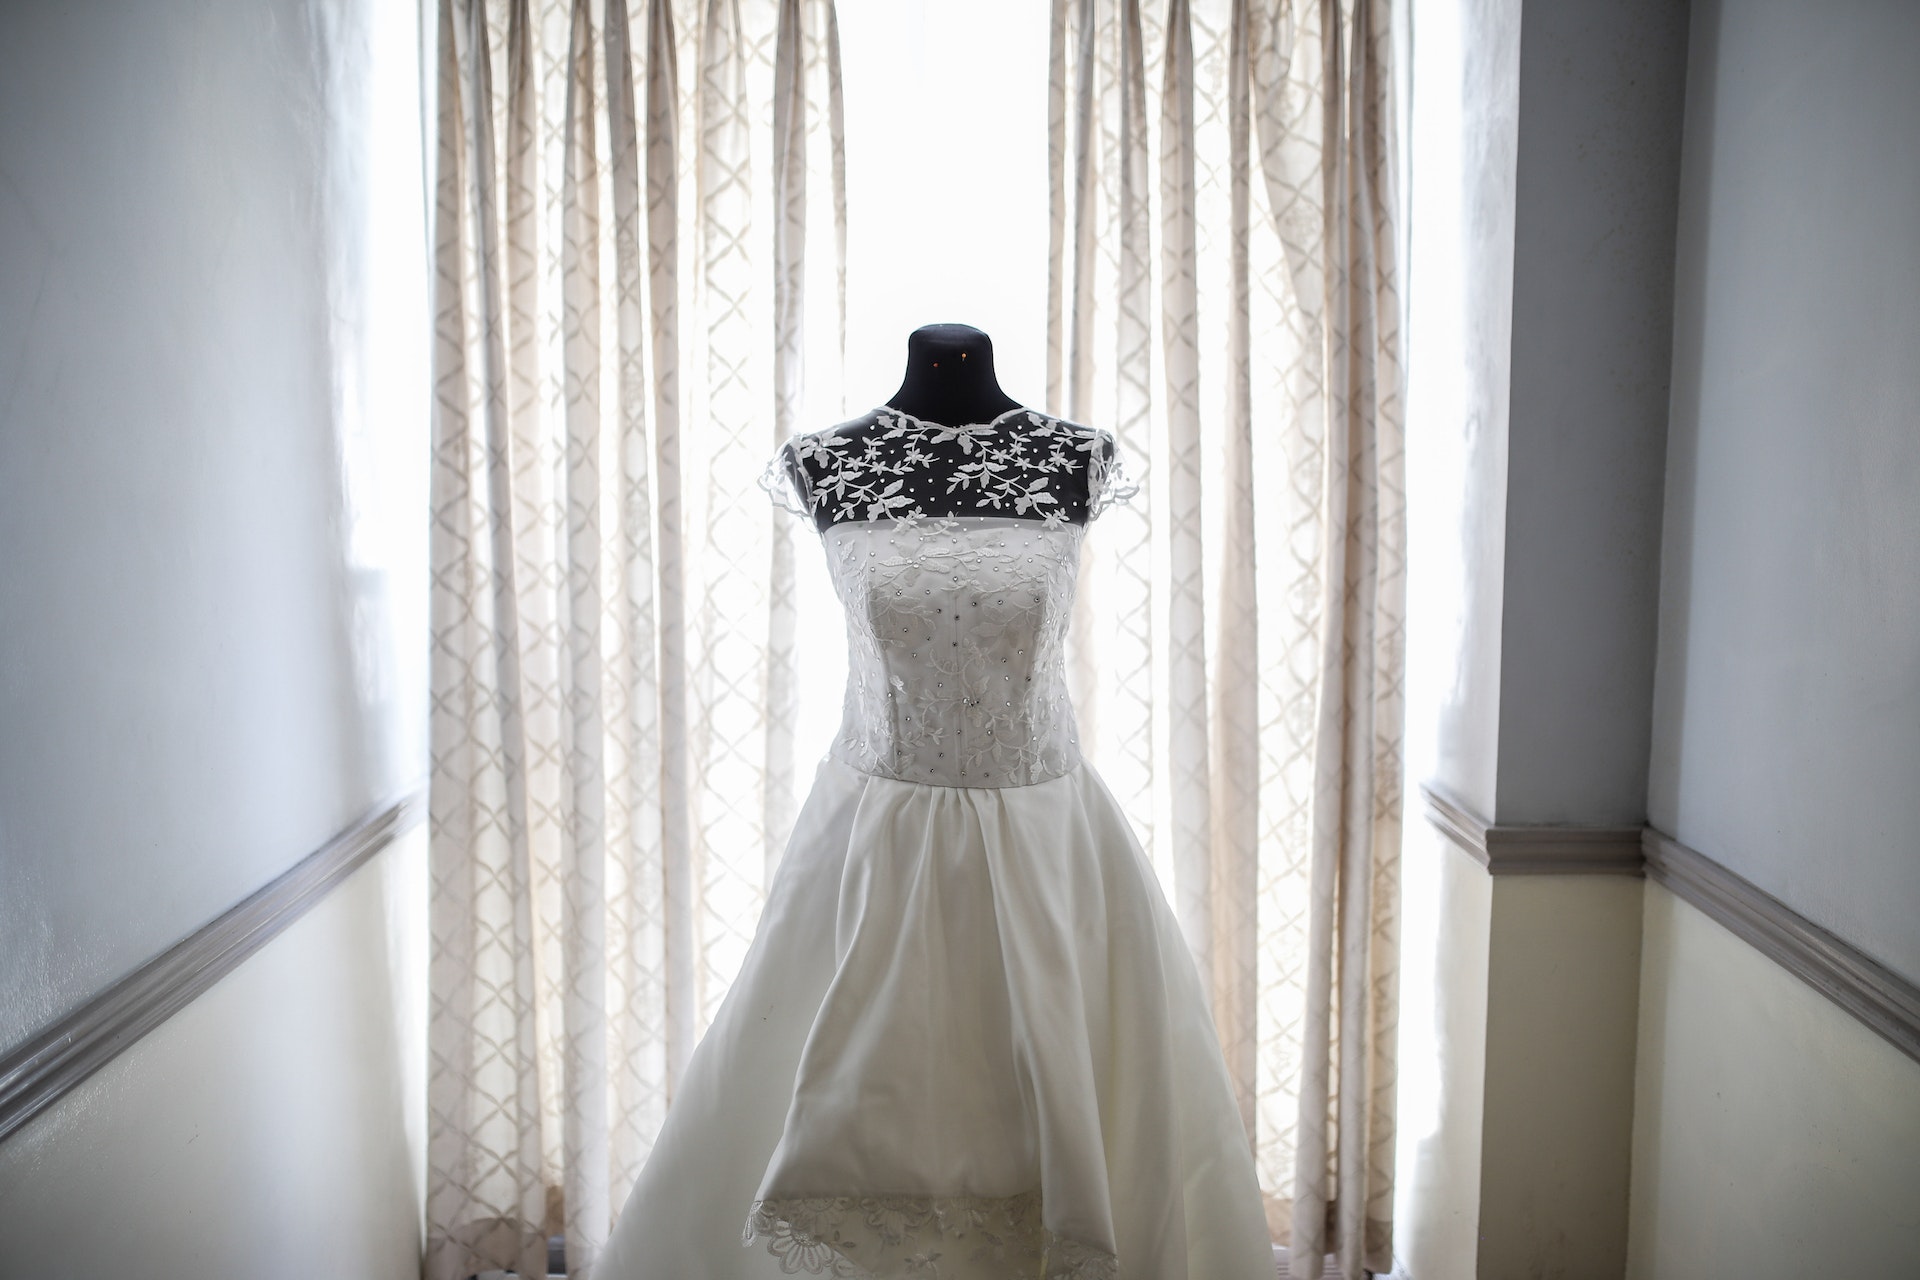 Une robe de mariée blanche | Source : Pexels